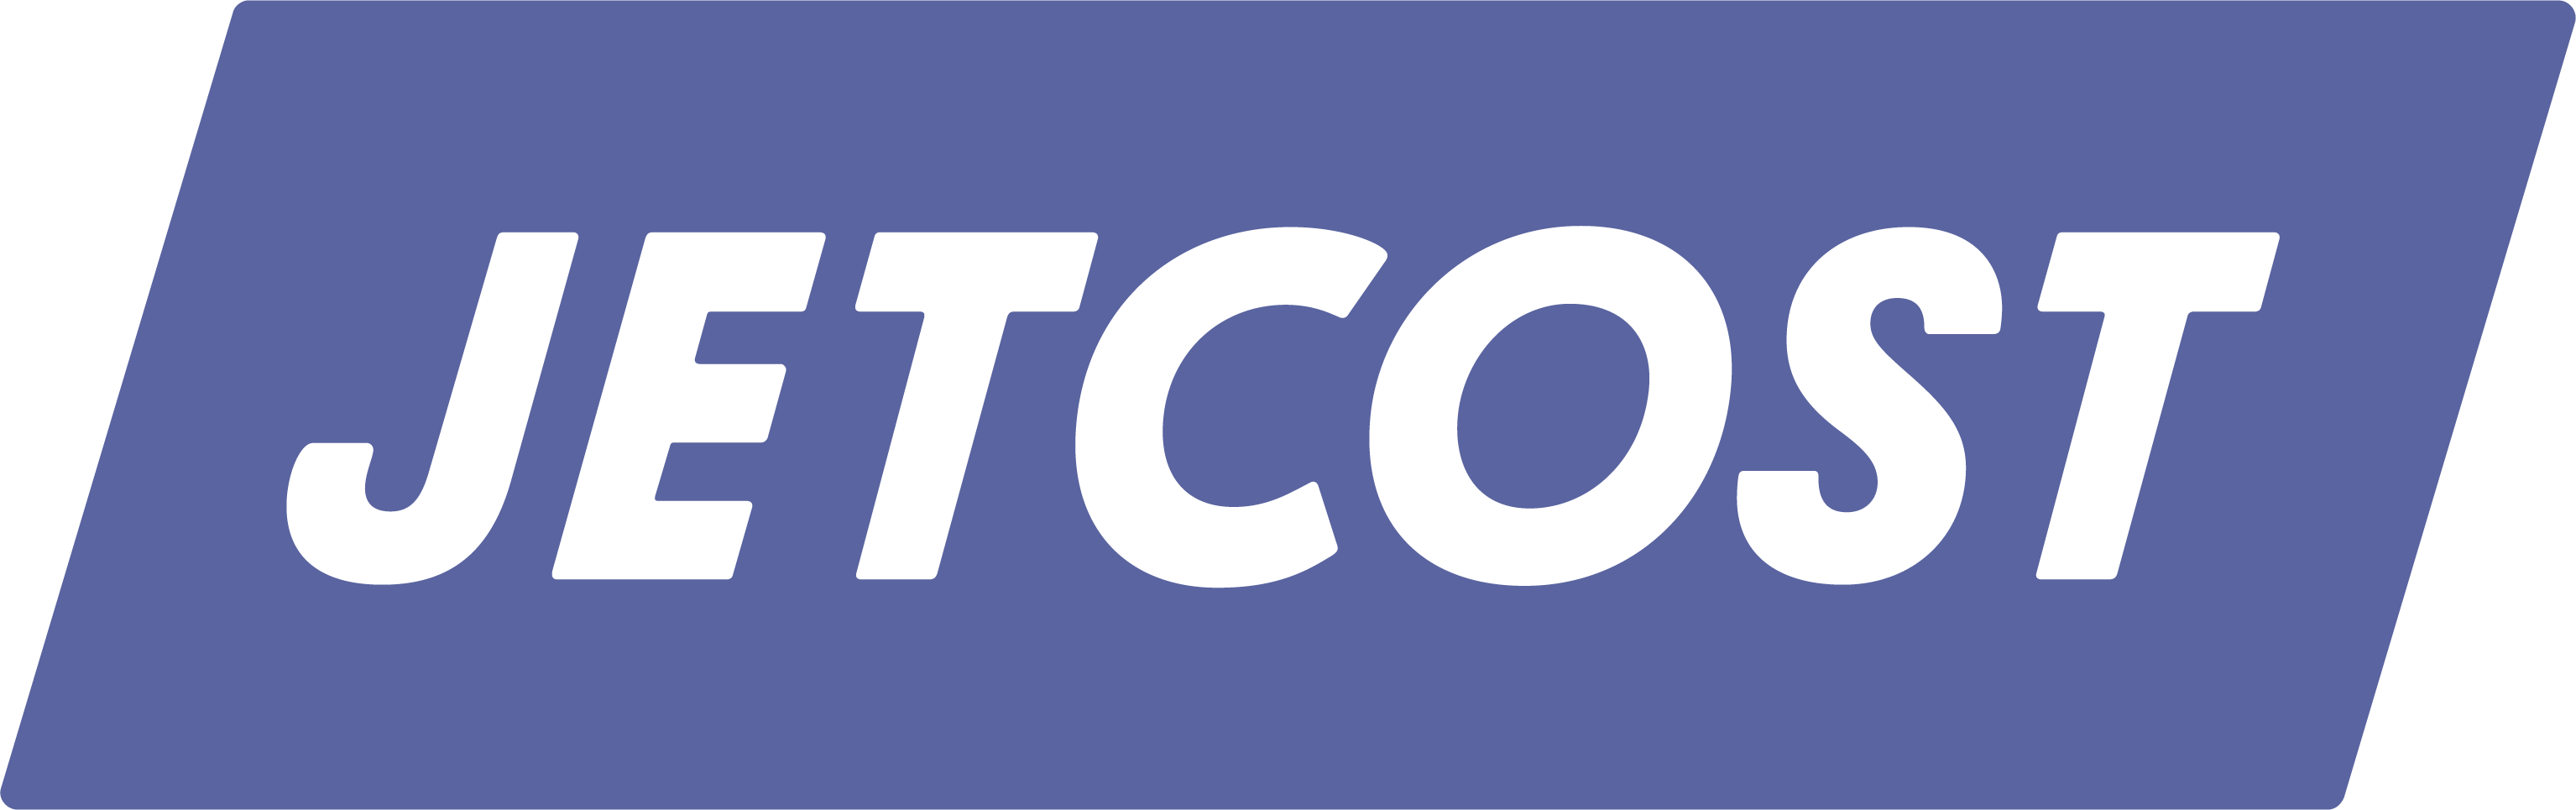 Jetcost_Logo_Blue